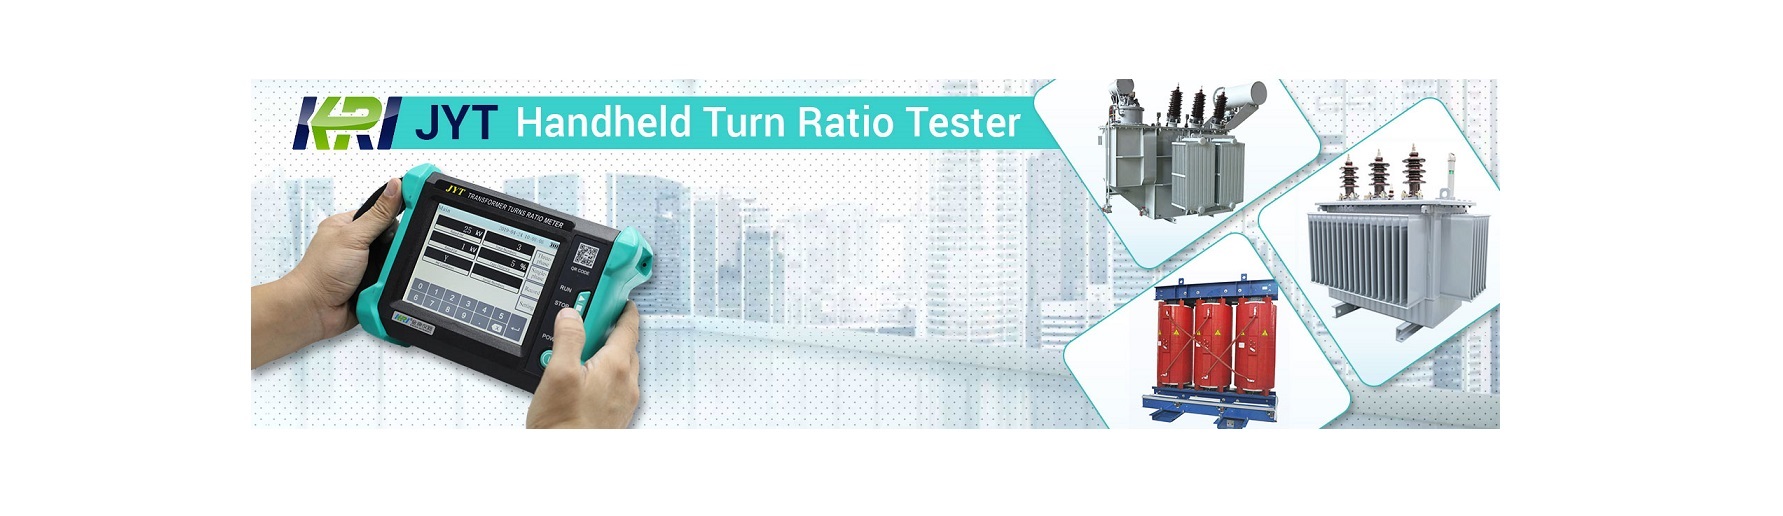 JYT handheld turn ratio tester